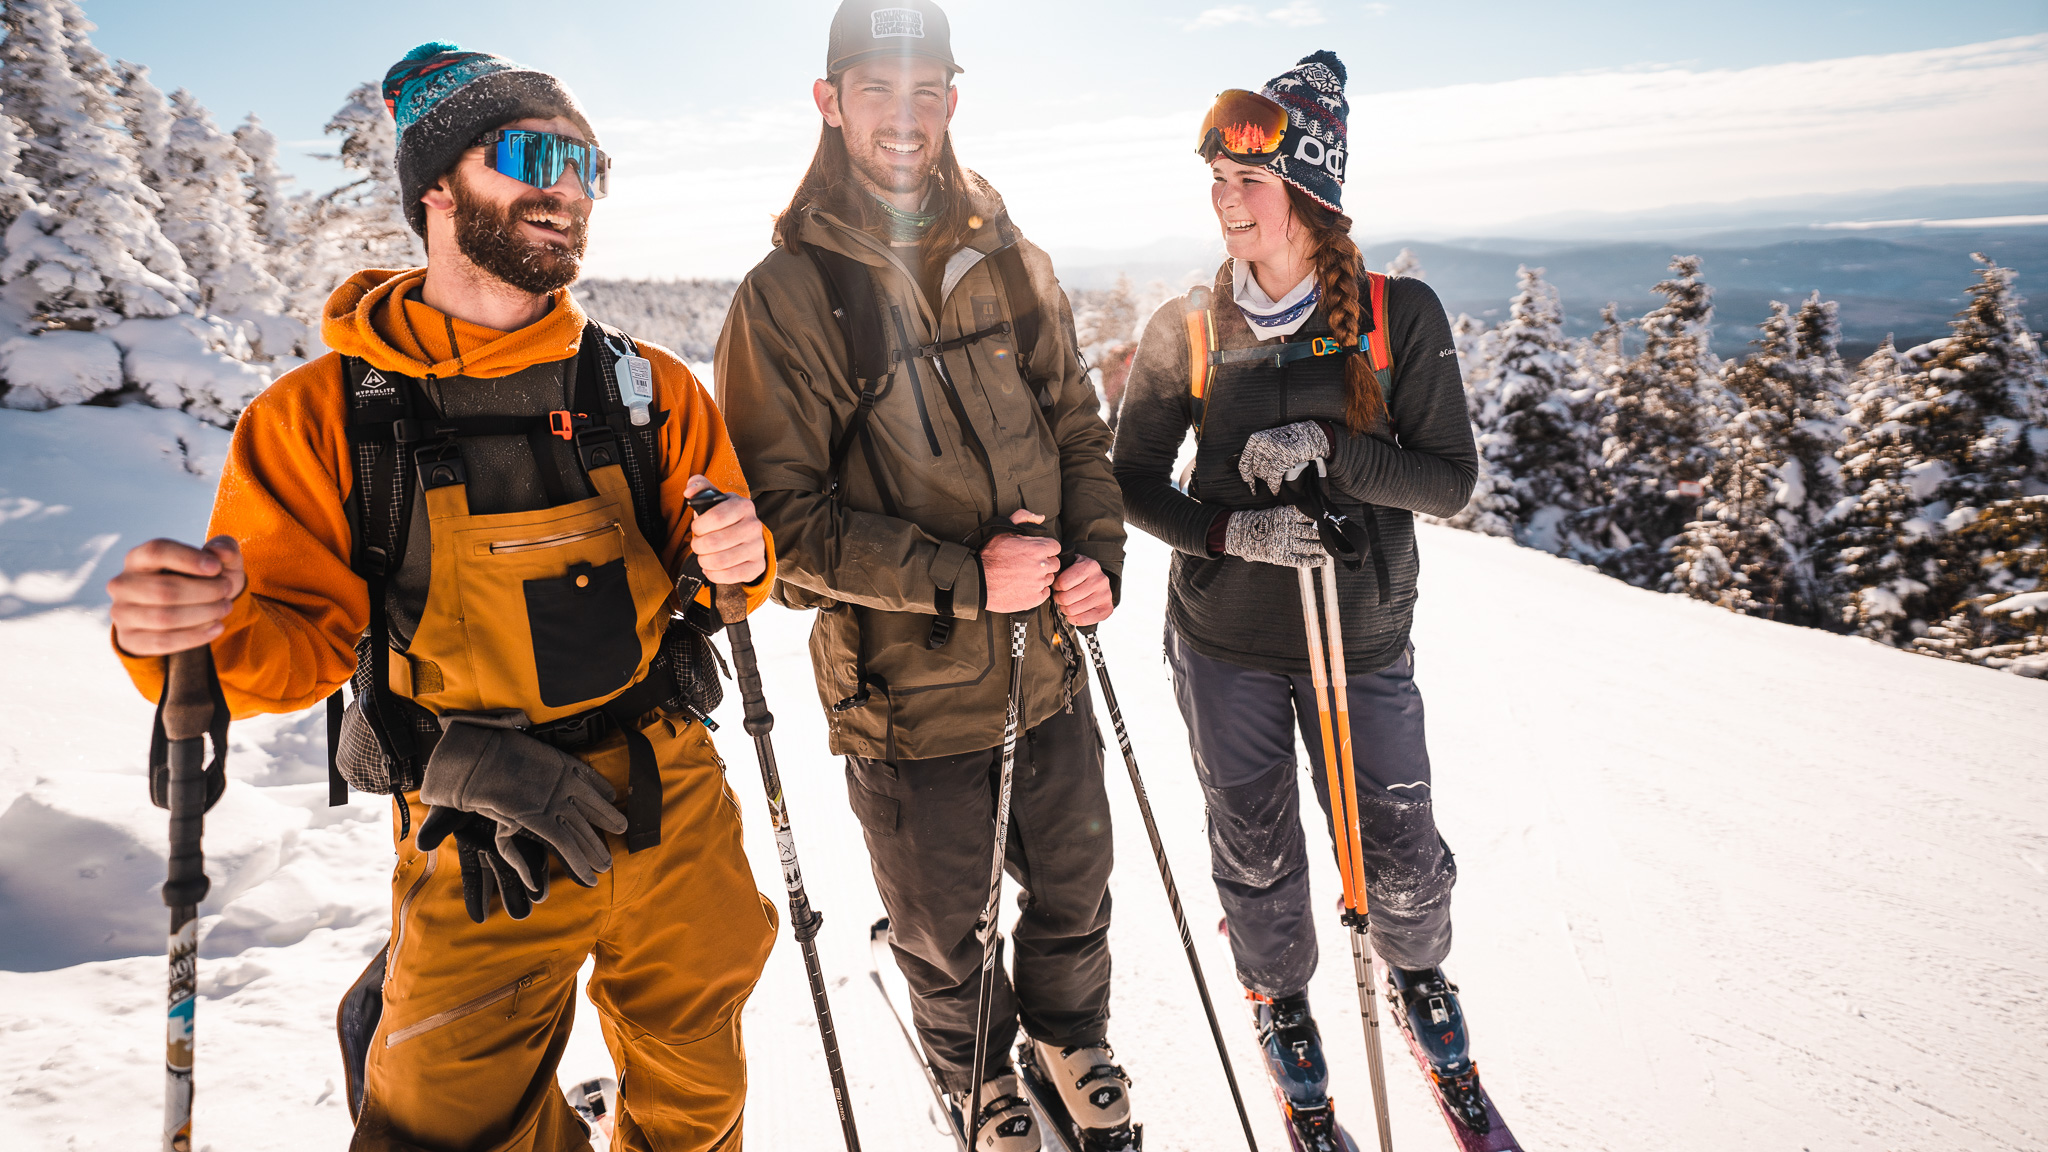 Three uphillers summitting at Saddleback